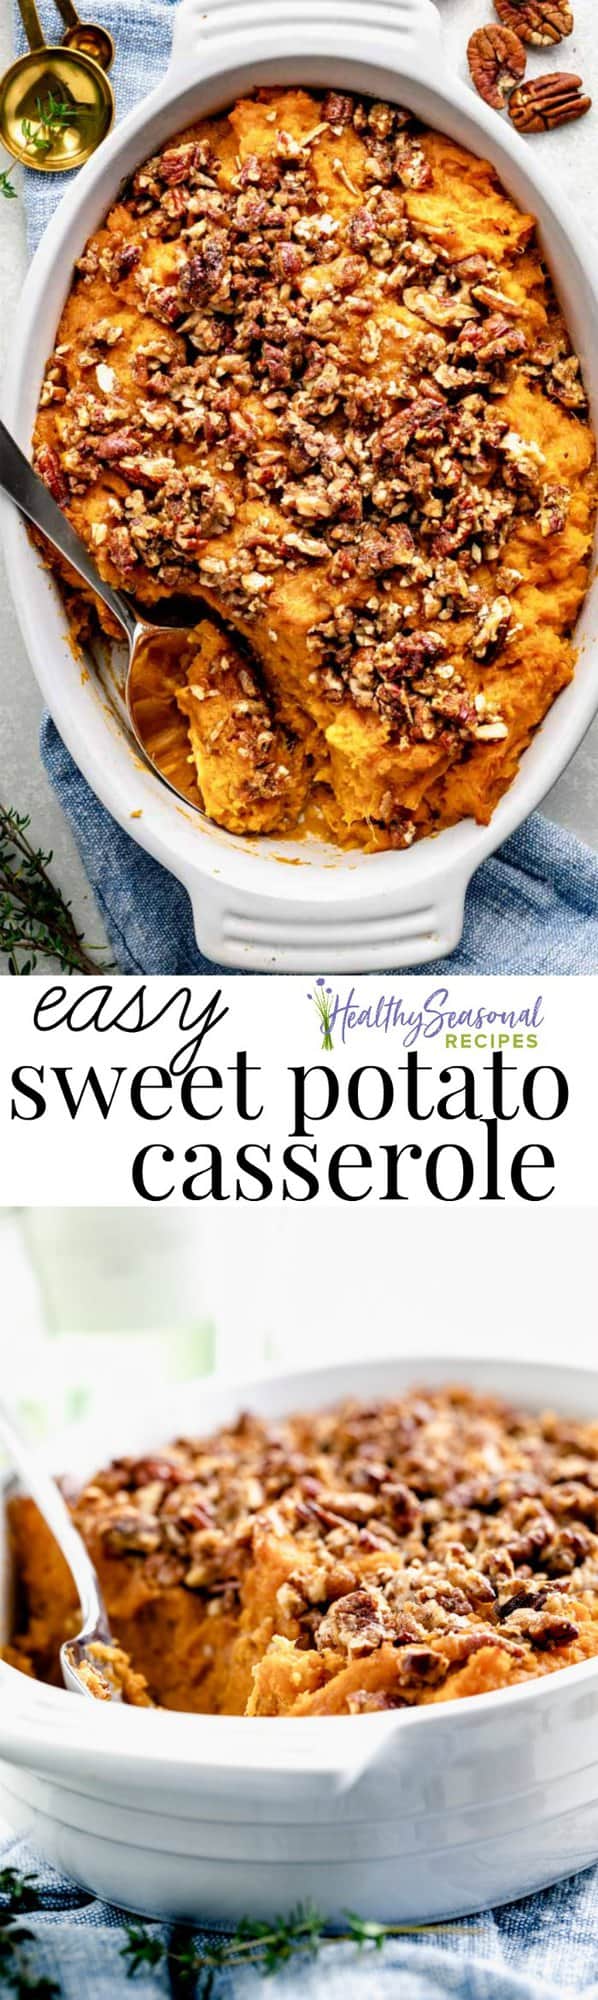 Easy Sweet Potato Casserole Healthy Seasonal Recipes,Rotel Dip Recipe With Ground Beef